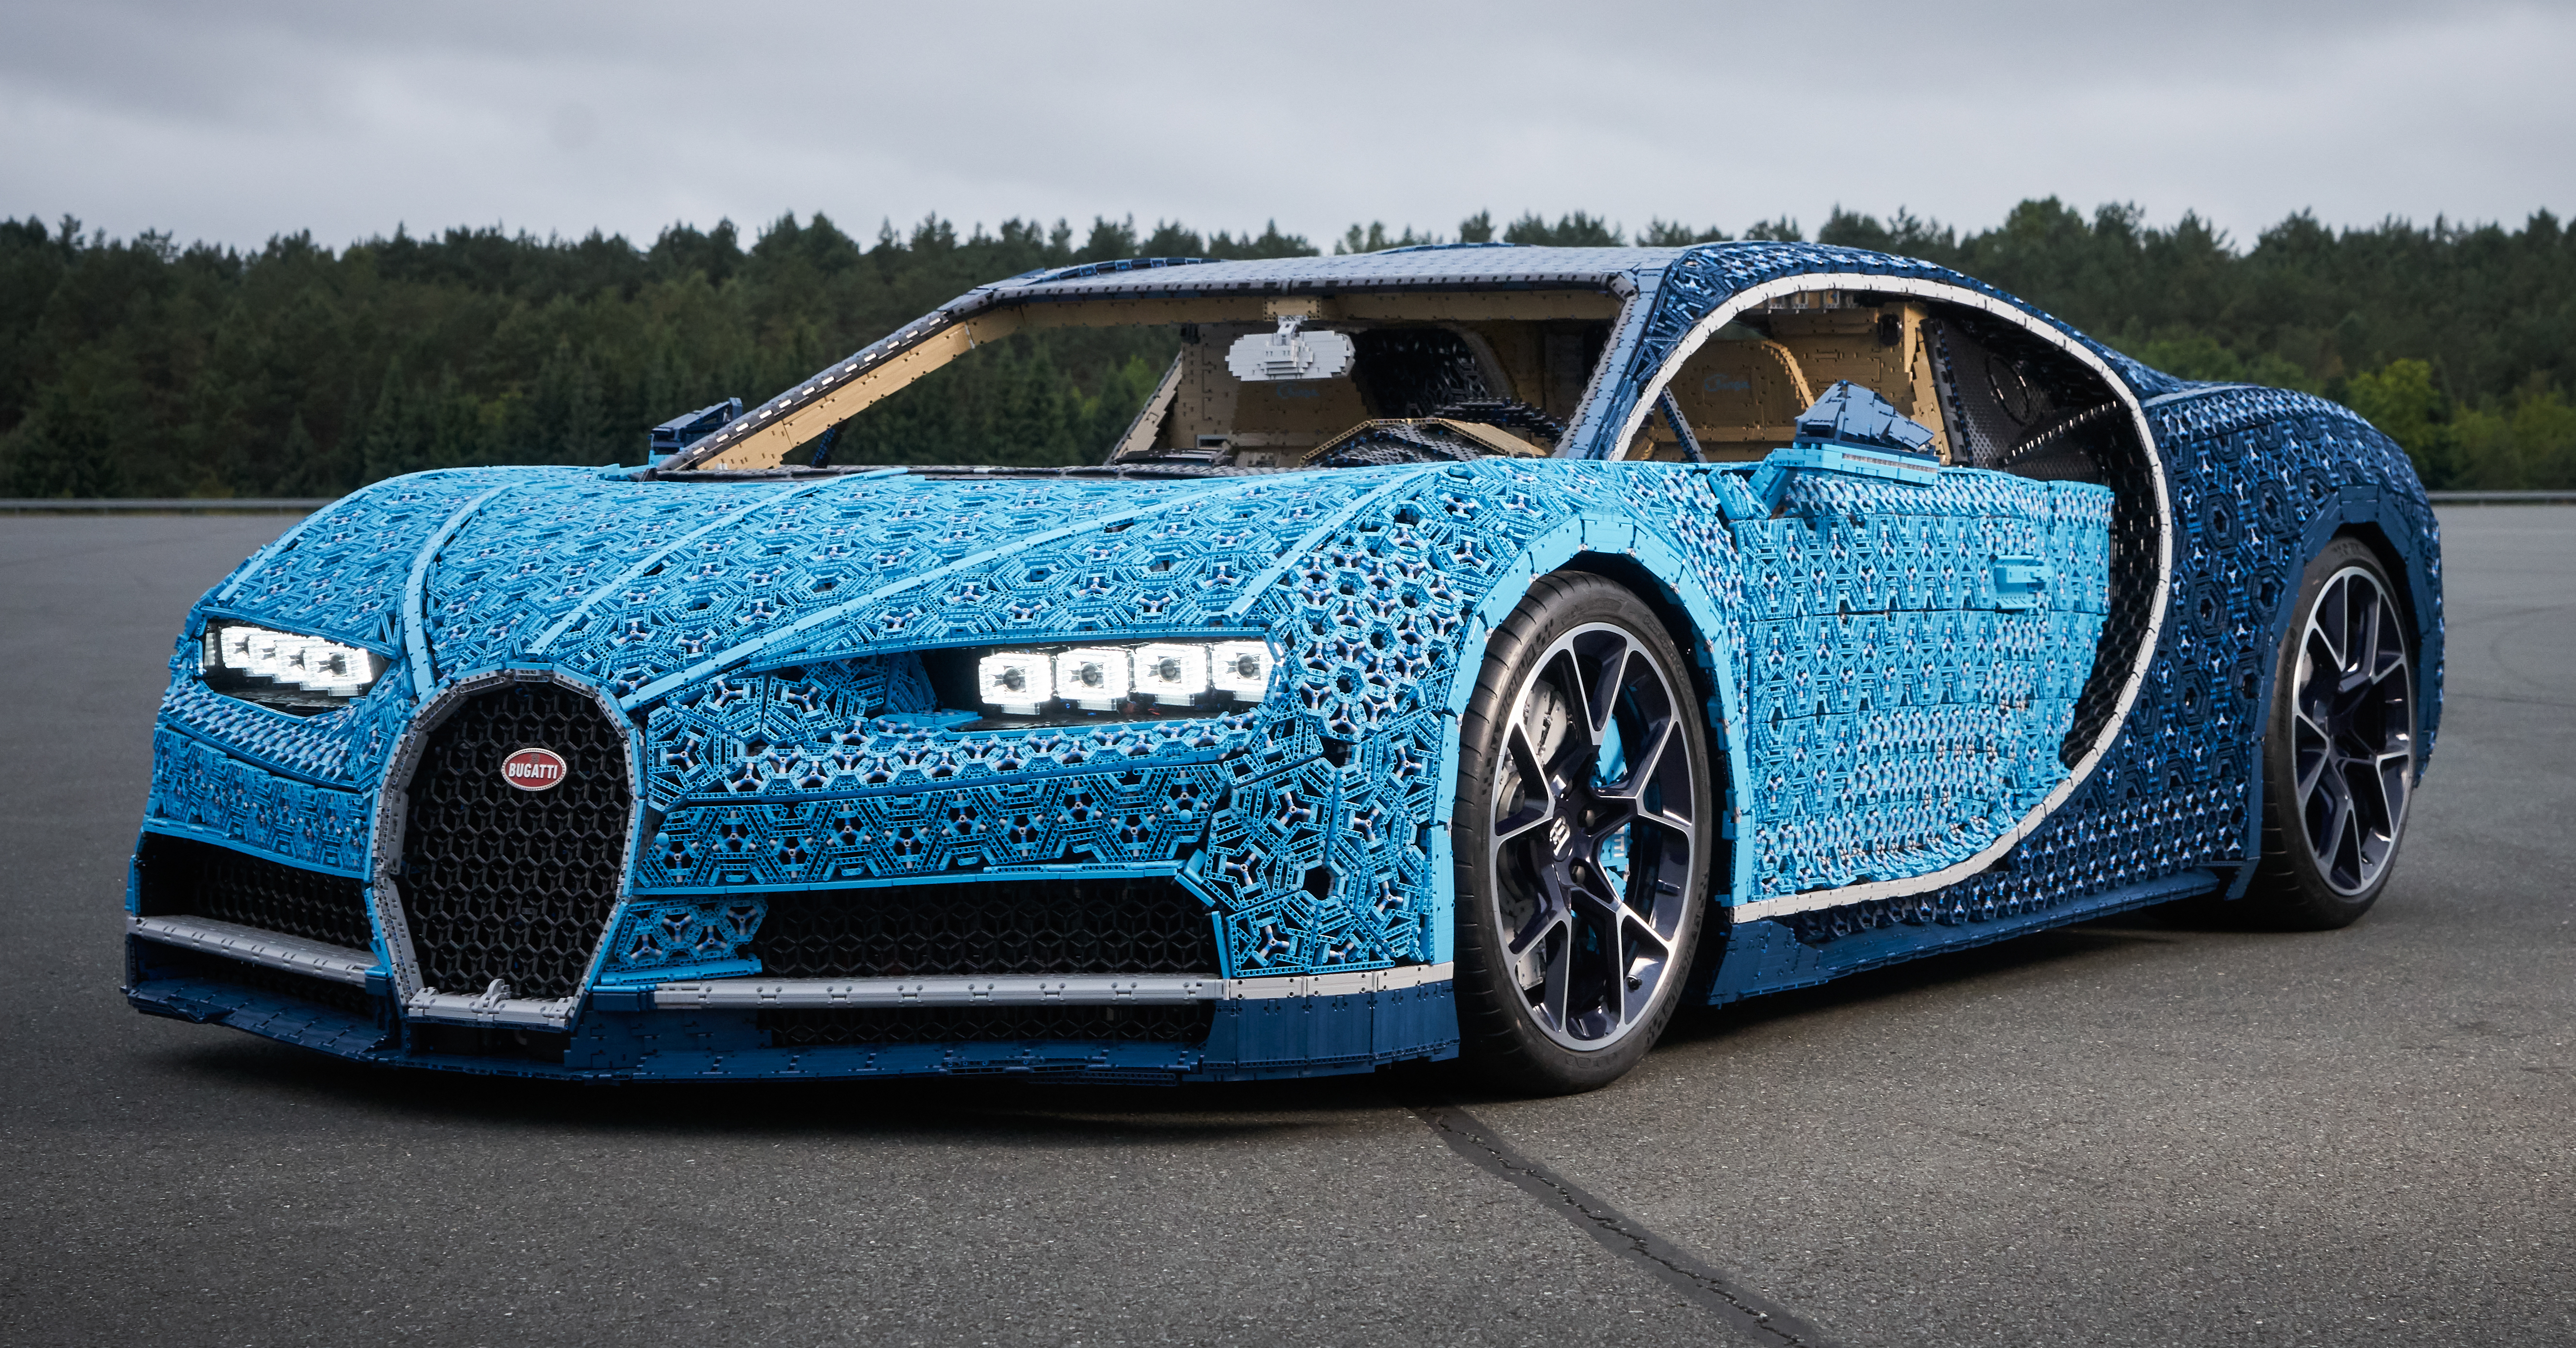 Lego built epic, life-sized Bugatti Chiron that drives! - paultan.org